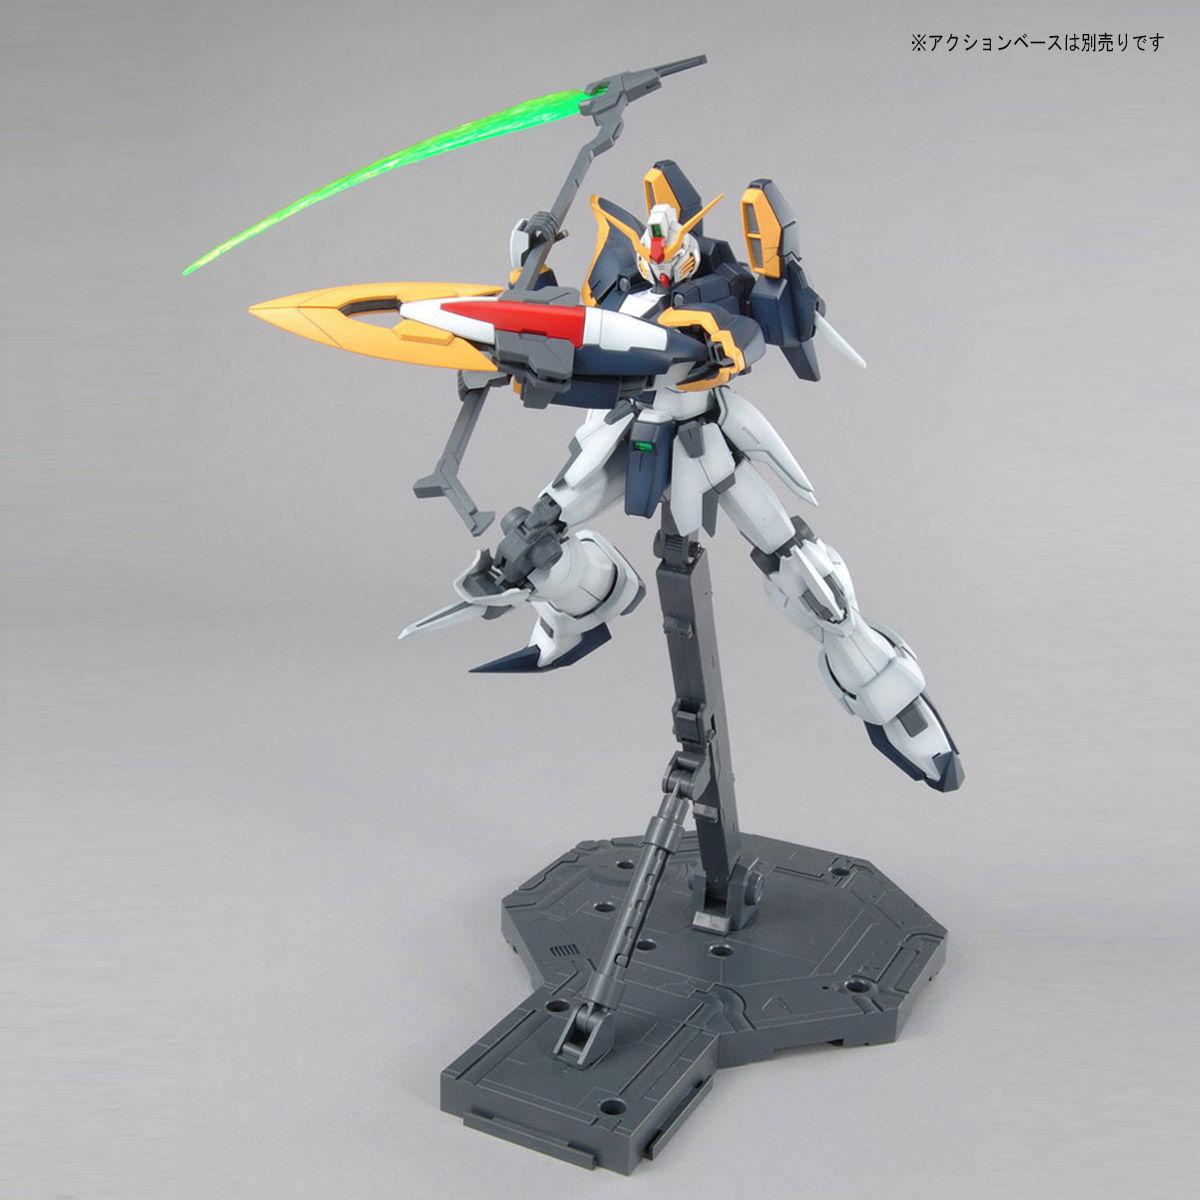 Gunpla 1/100 MG Gundam Deathscythe EW Version-Bandai-Ace Cards &amp; Collectibles